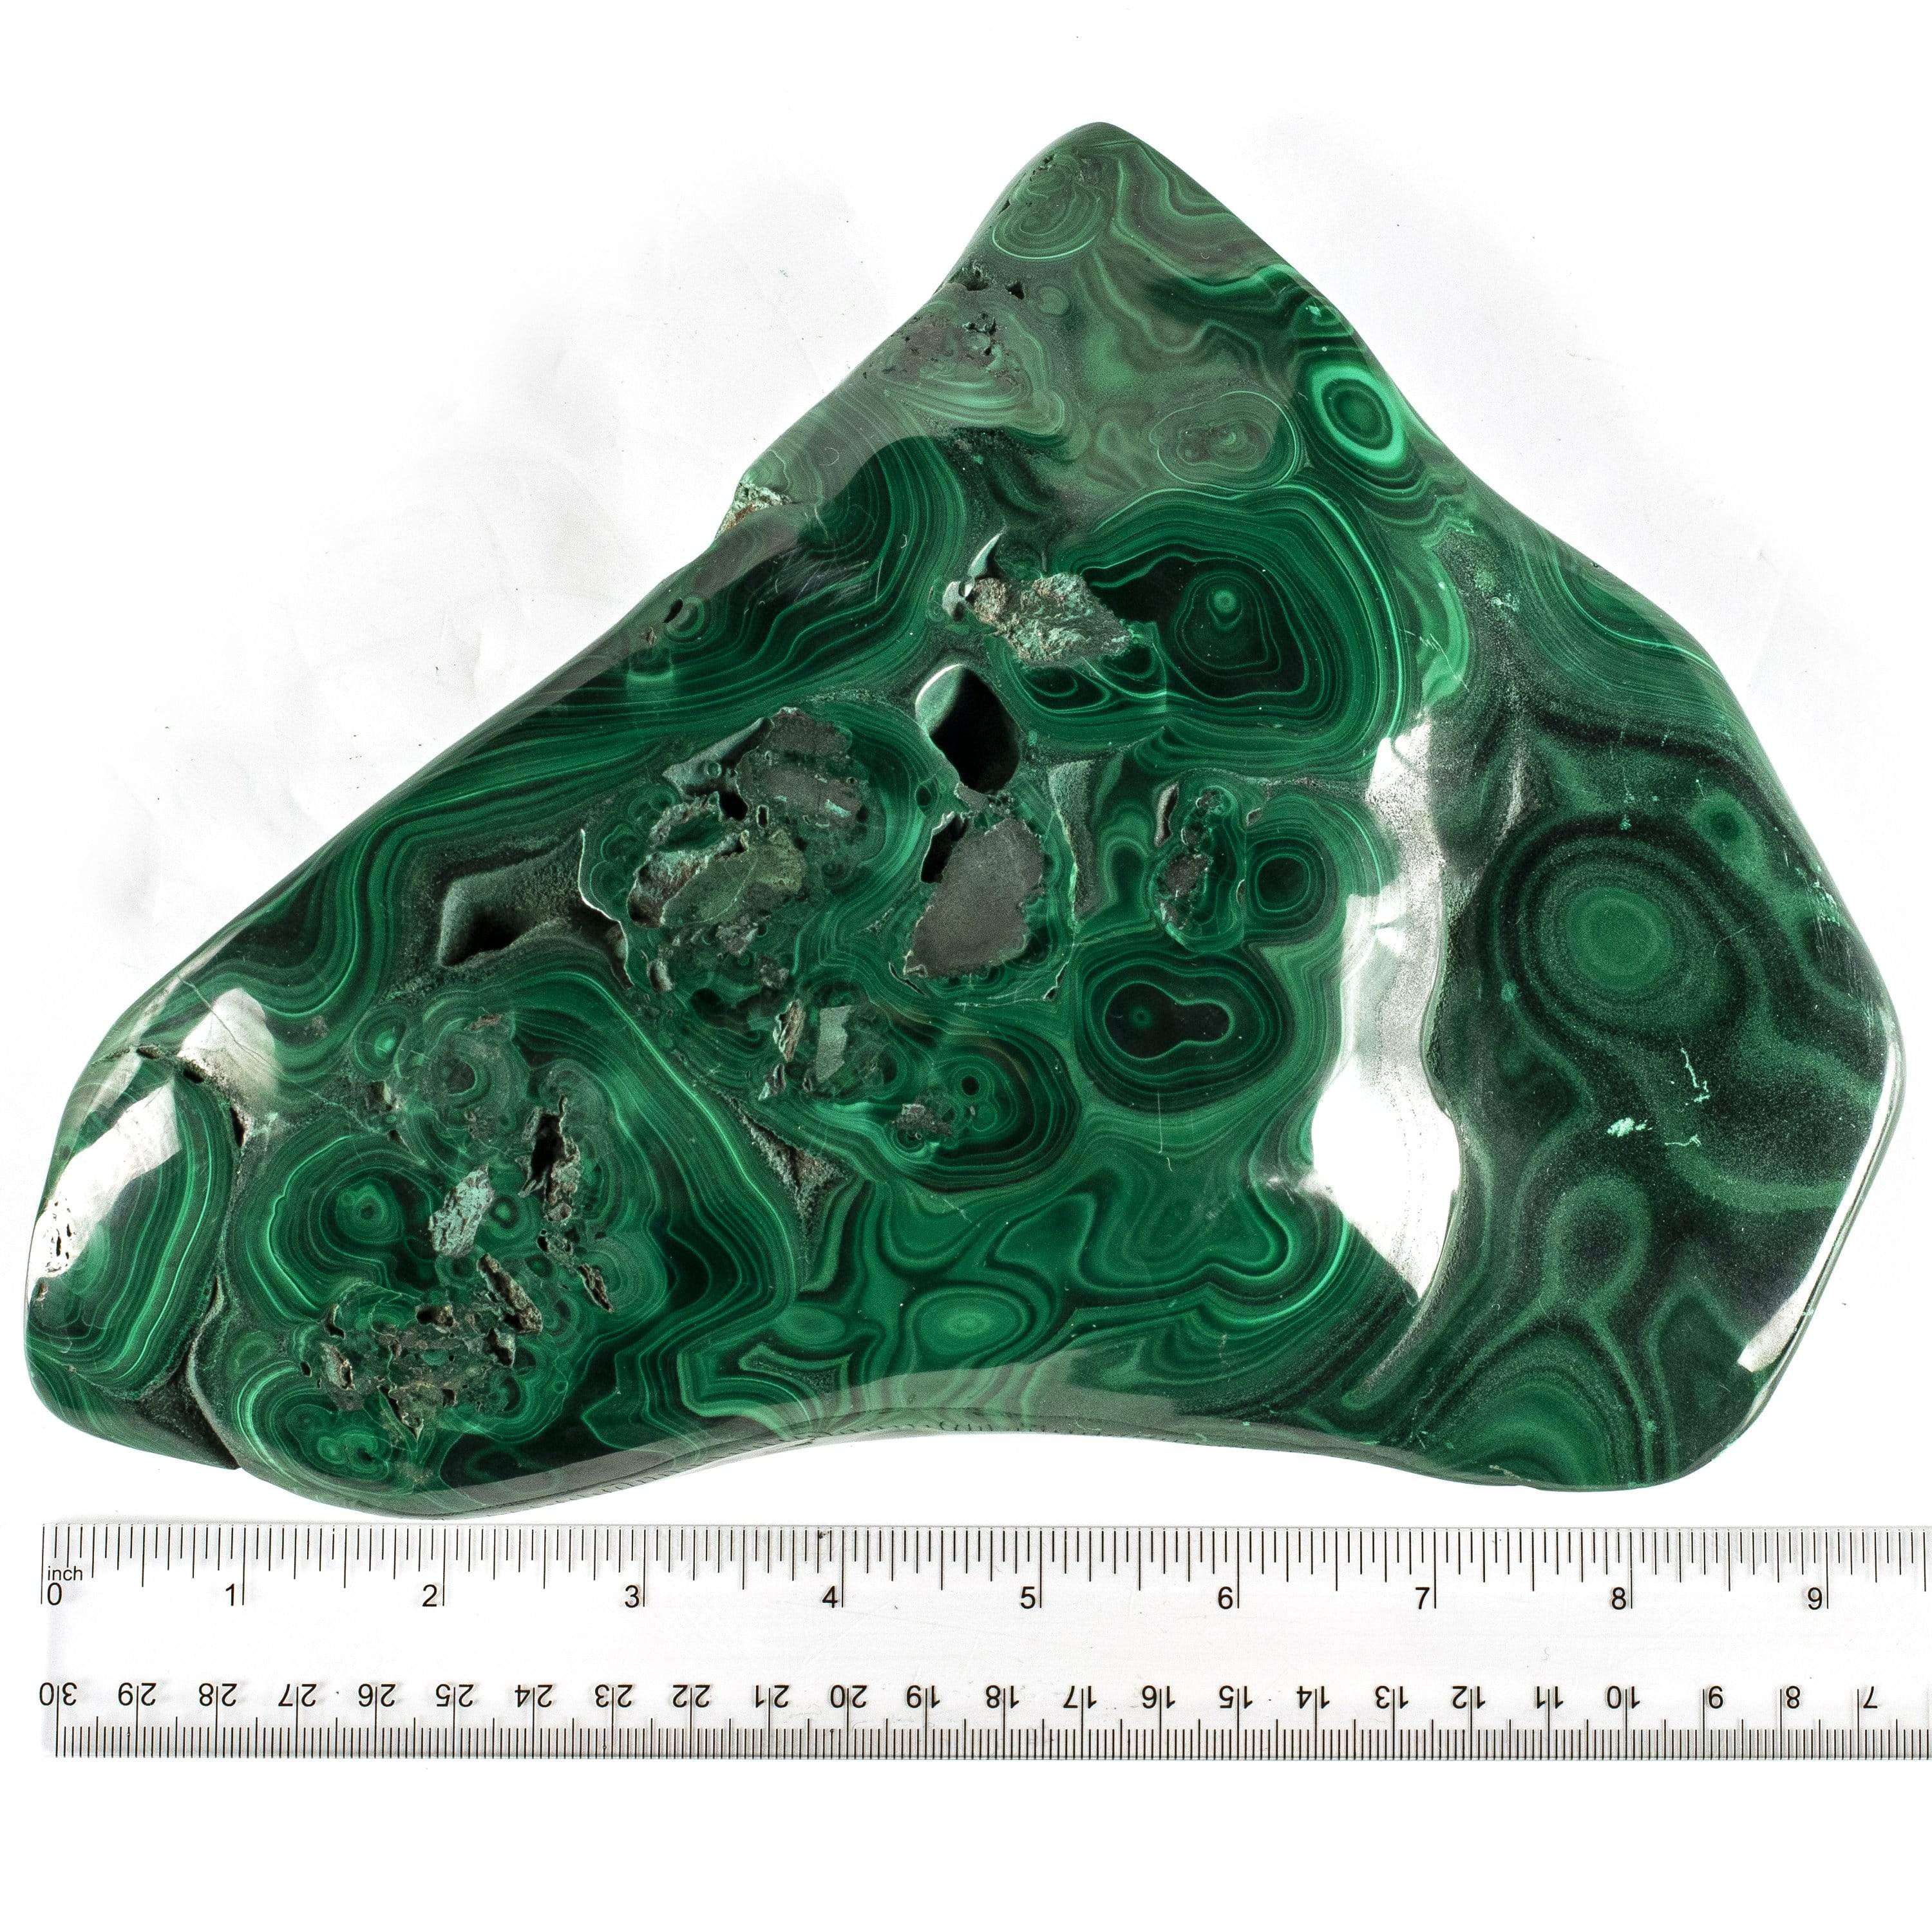 Kalifano Malachite Rare Natural Green Malachite Polished Freeform Specimen from Congo - 3.3 kg / 7.2 lbs MA2100.003